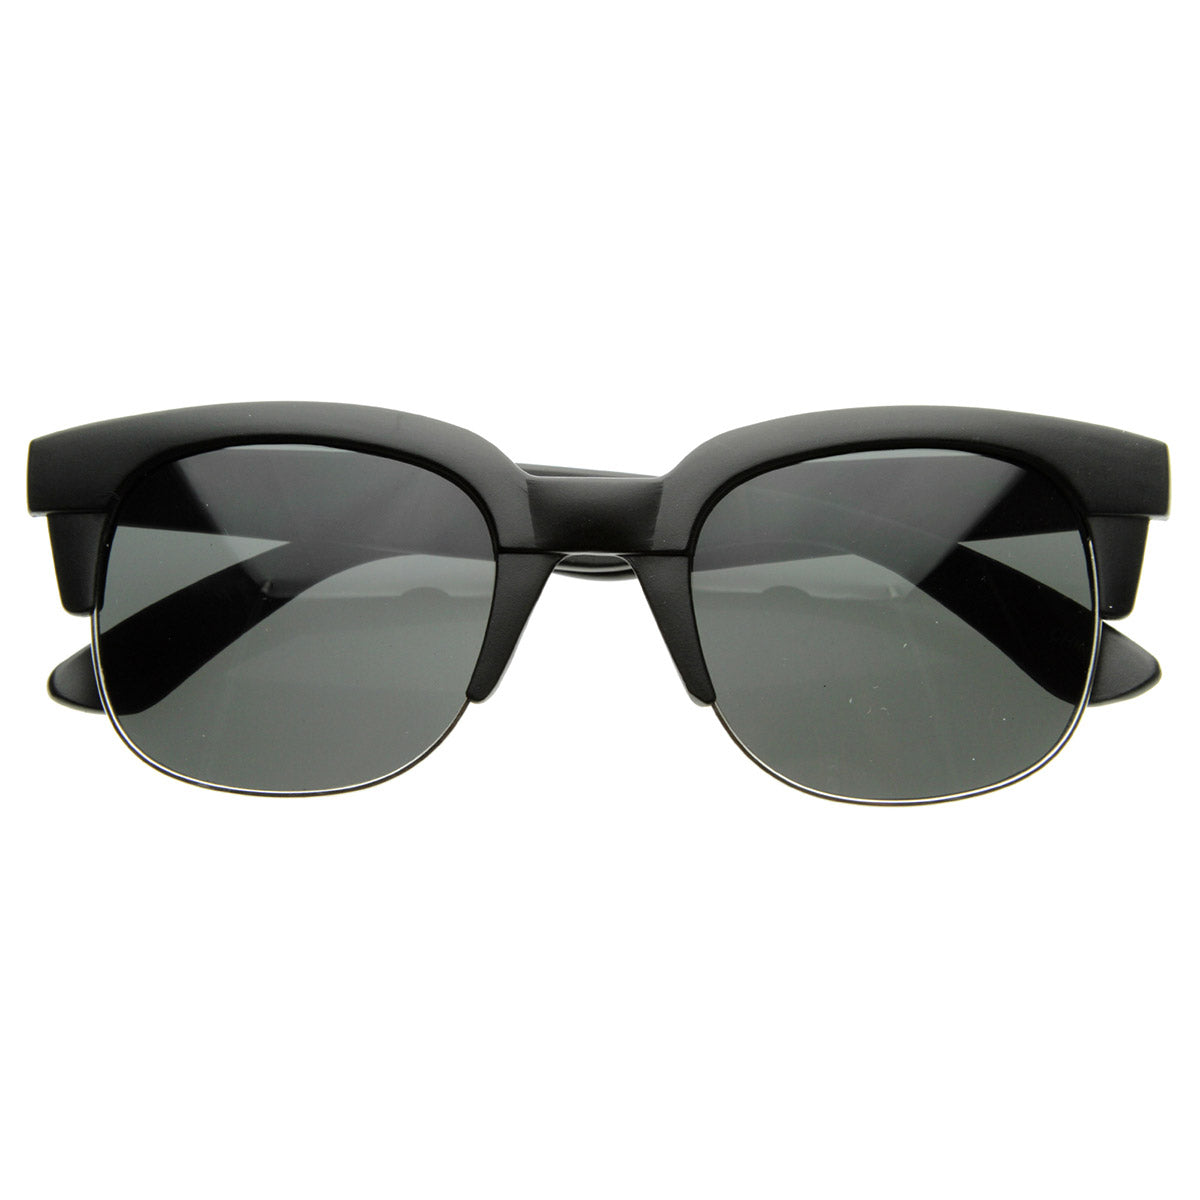 Super Square Modern Fashion Half Frame Retro Horn Rimmed Sunglasses ...